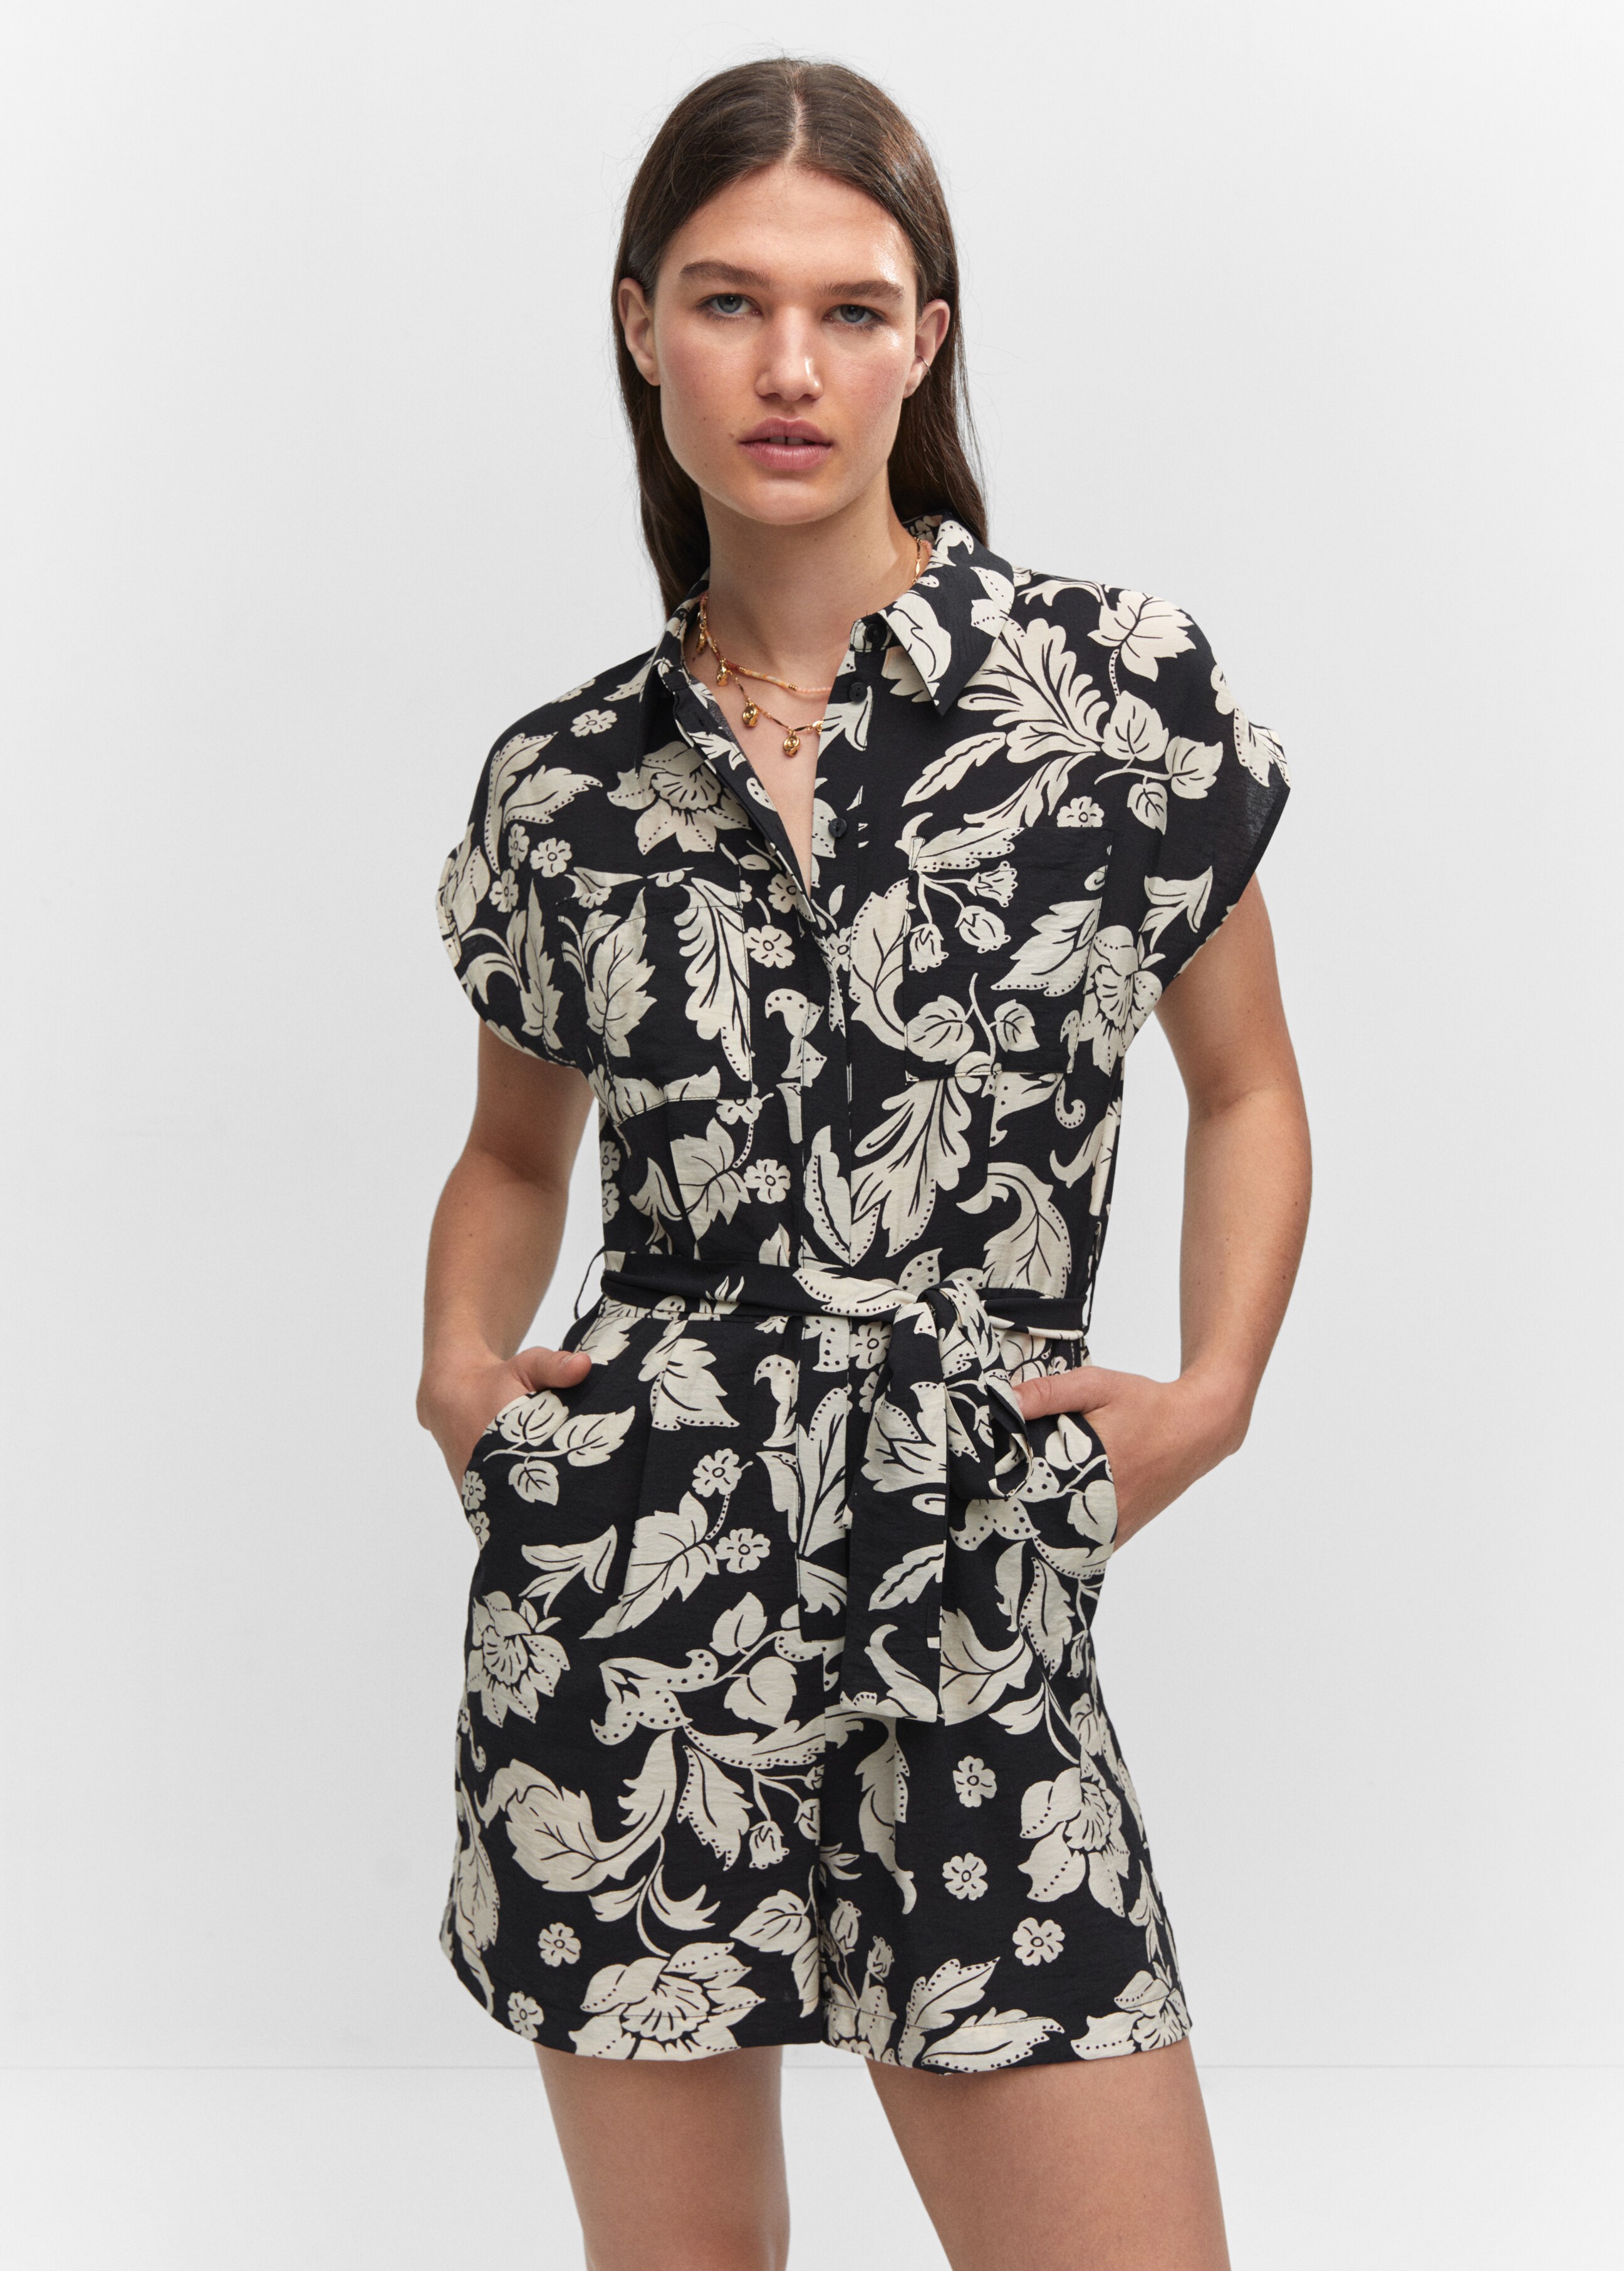 Floral-print jumpsuit with tie - Medium plane